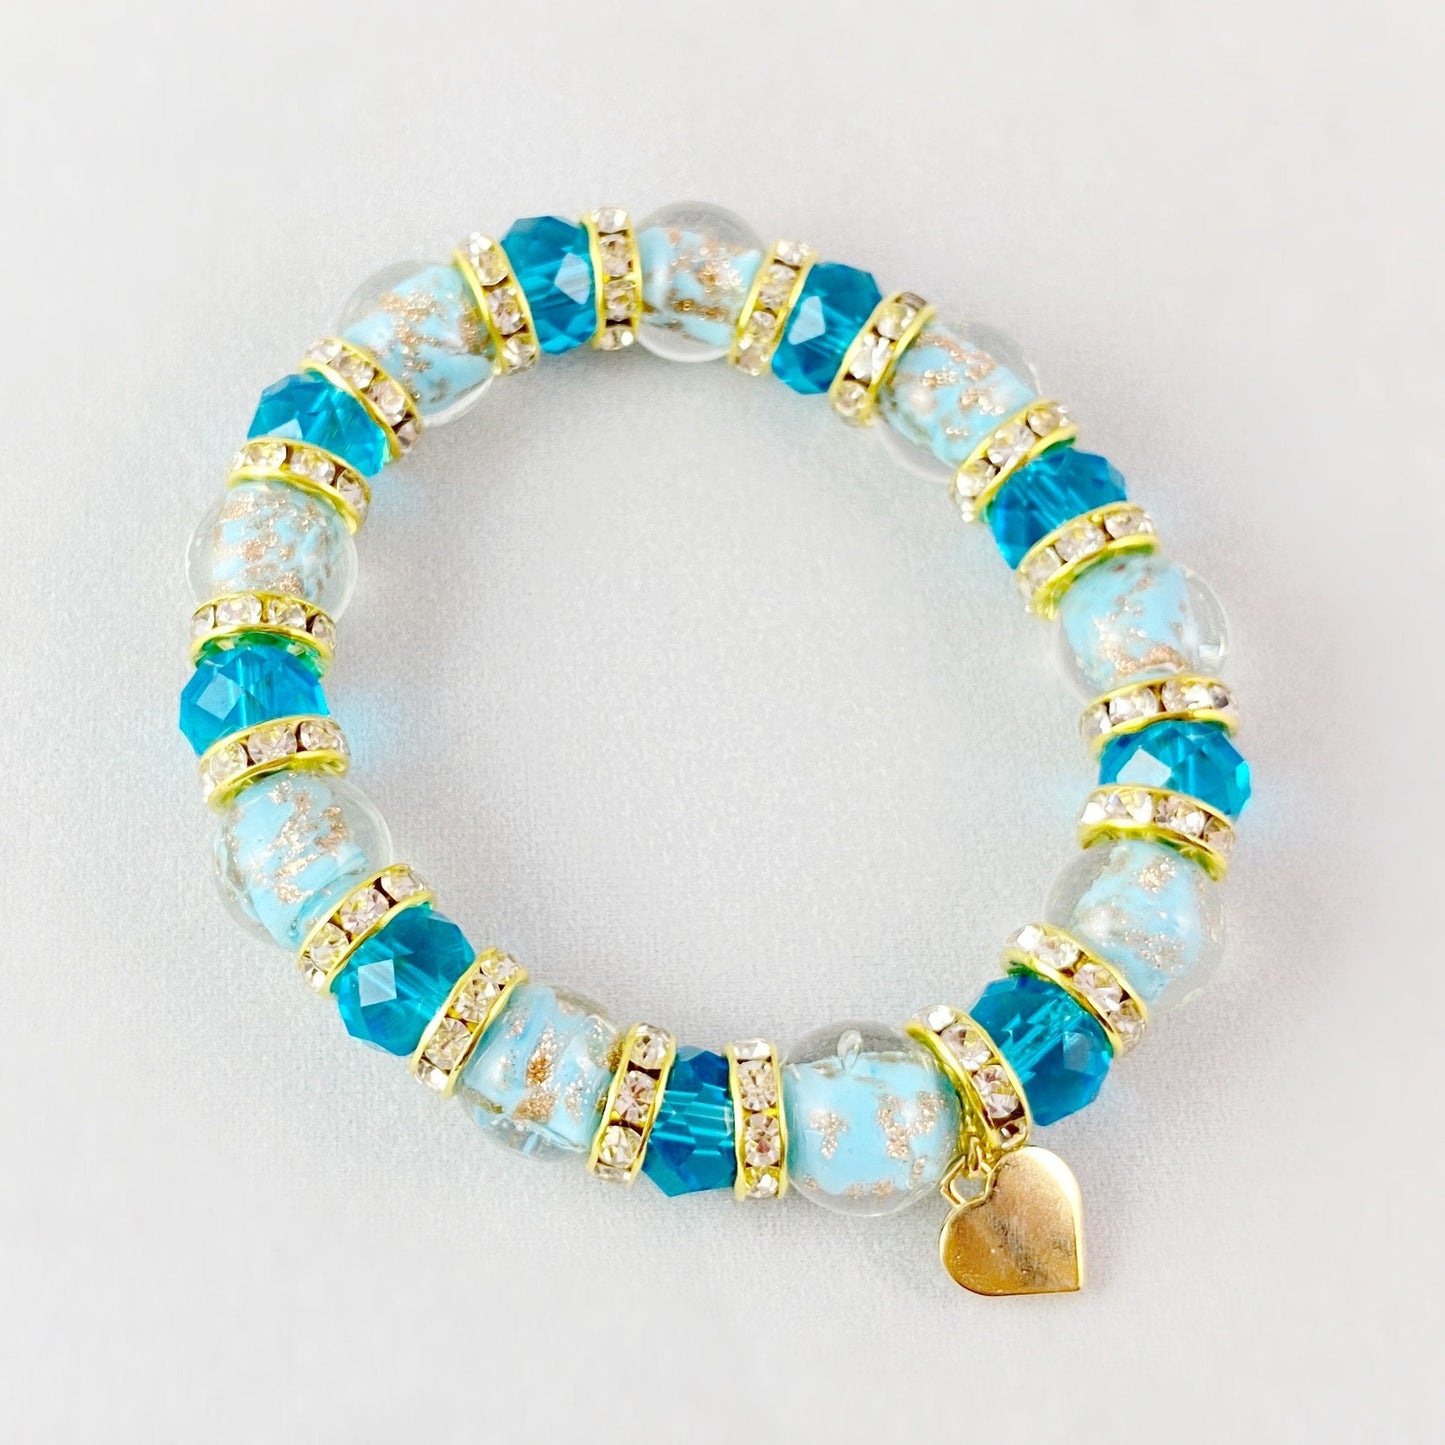 Aqua Blue Beaded Venetian Glass Bracelet - Handmade in Italy, Colorful Murano Glass